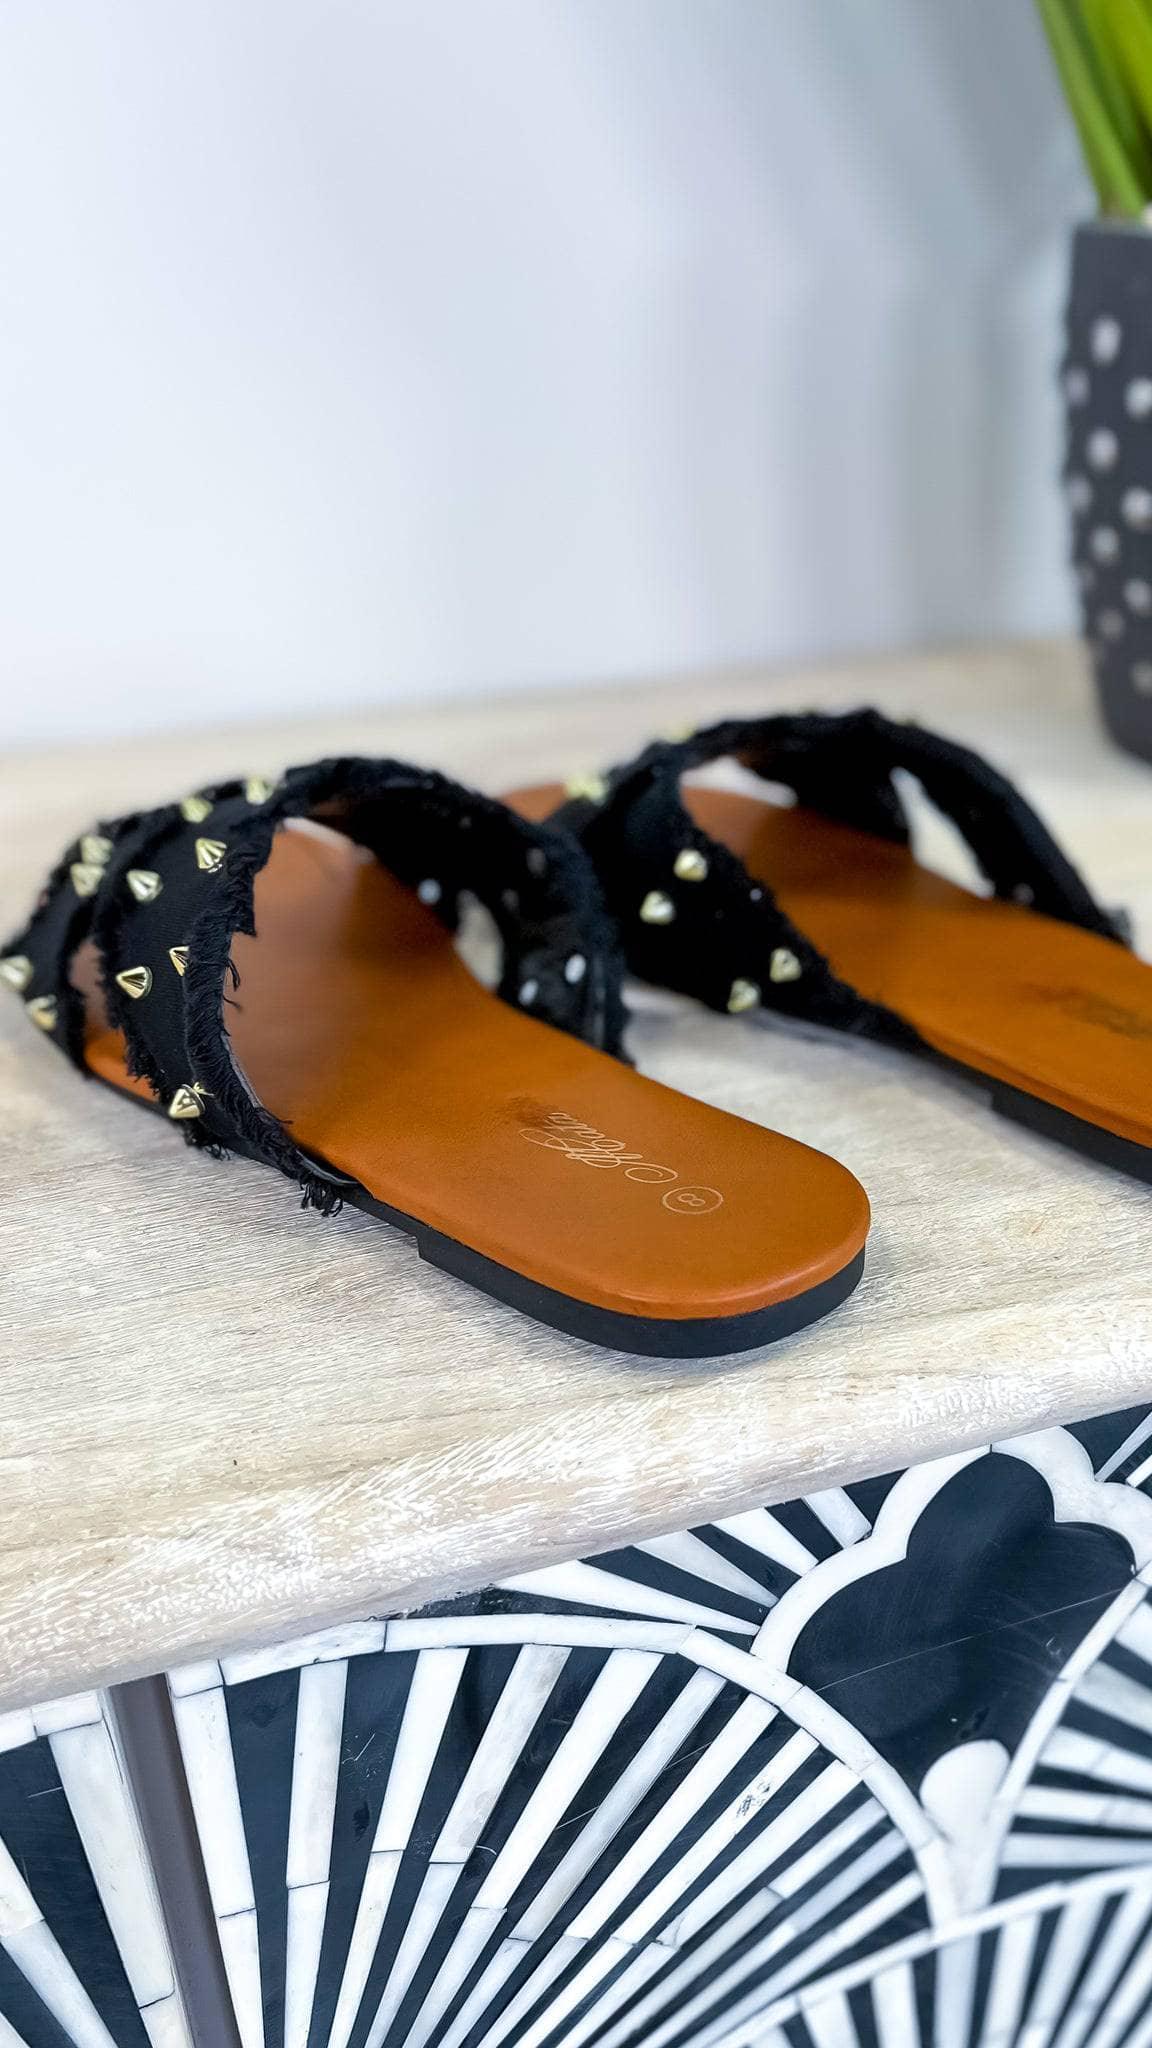 Summer Bliss Sandals - The ZigZag Stripe